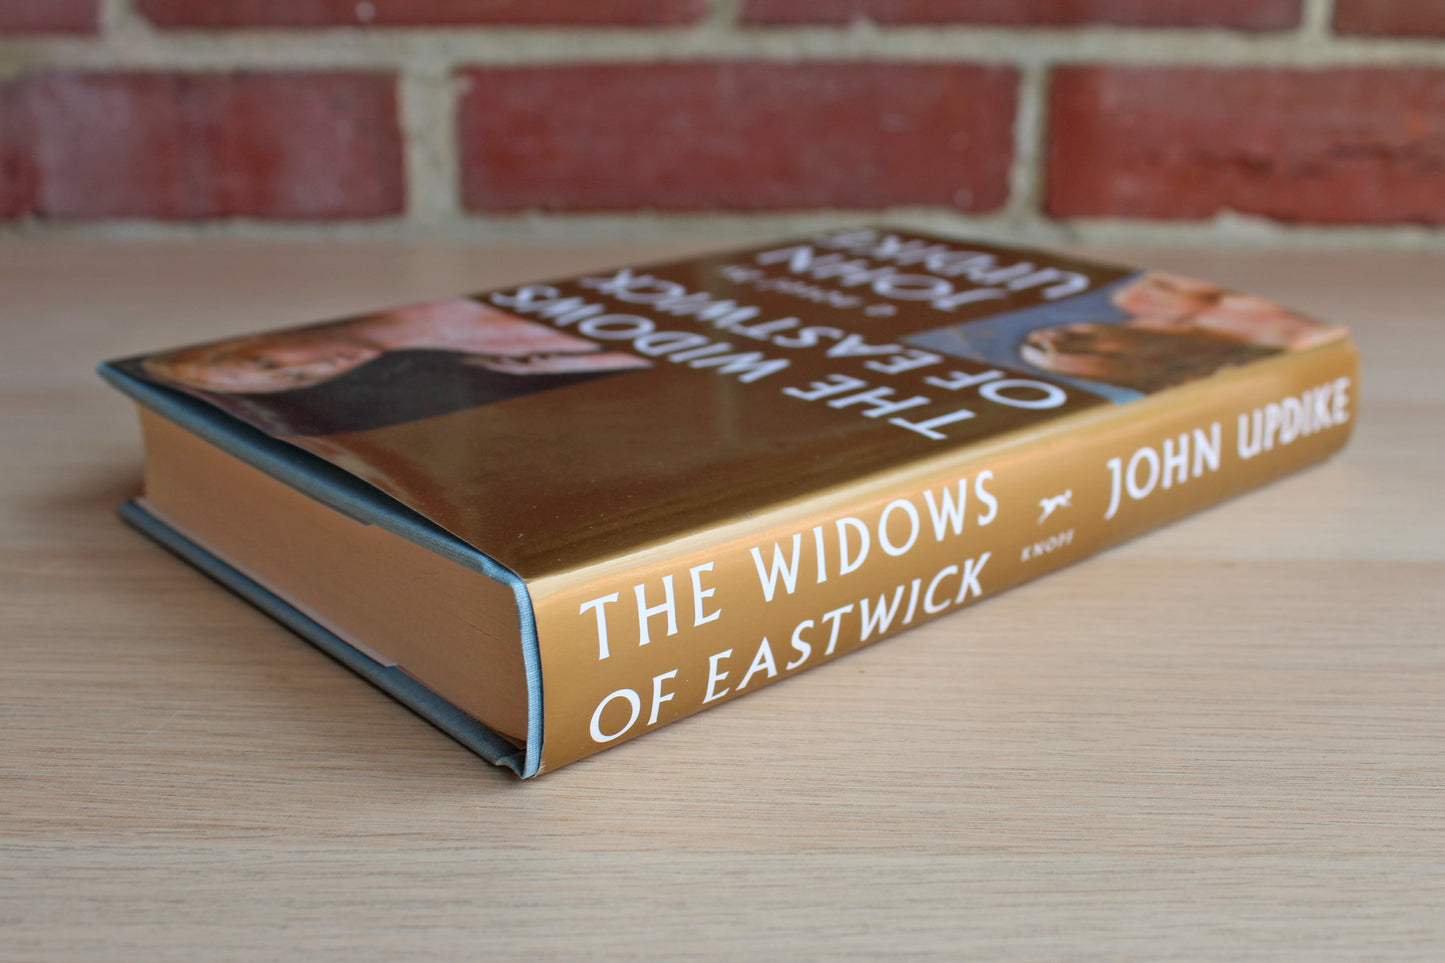 The Widows of Eastwick by John Updike